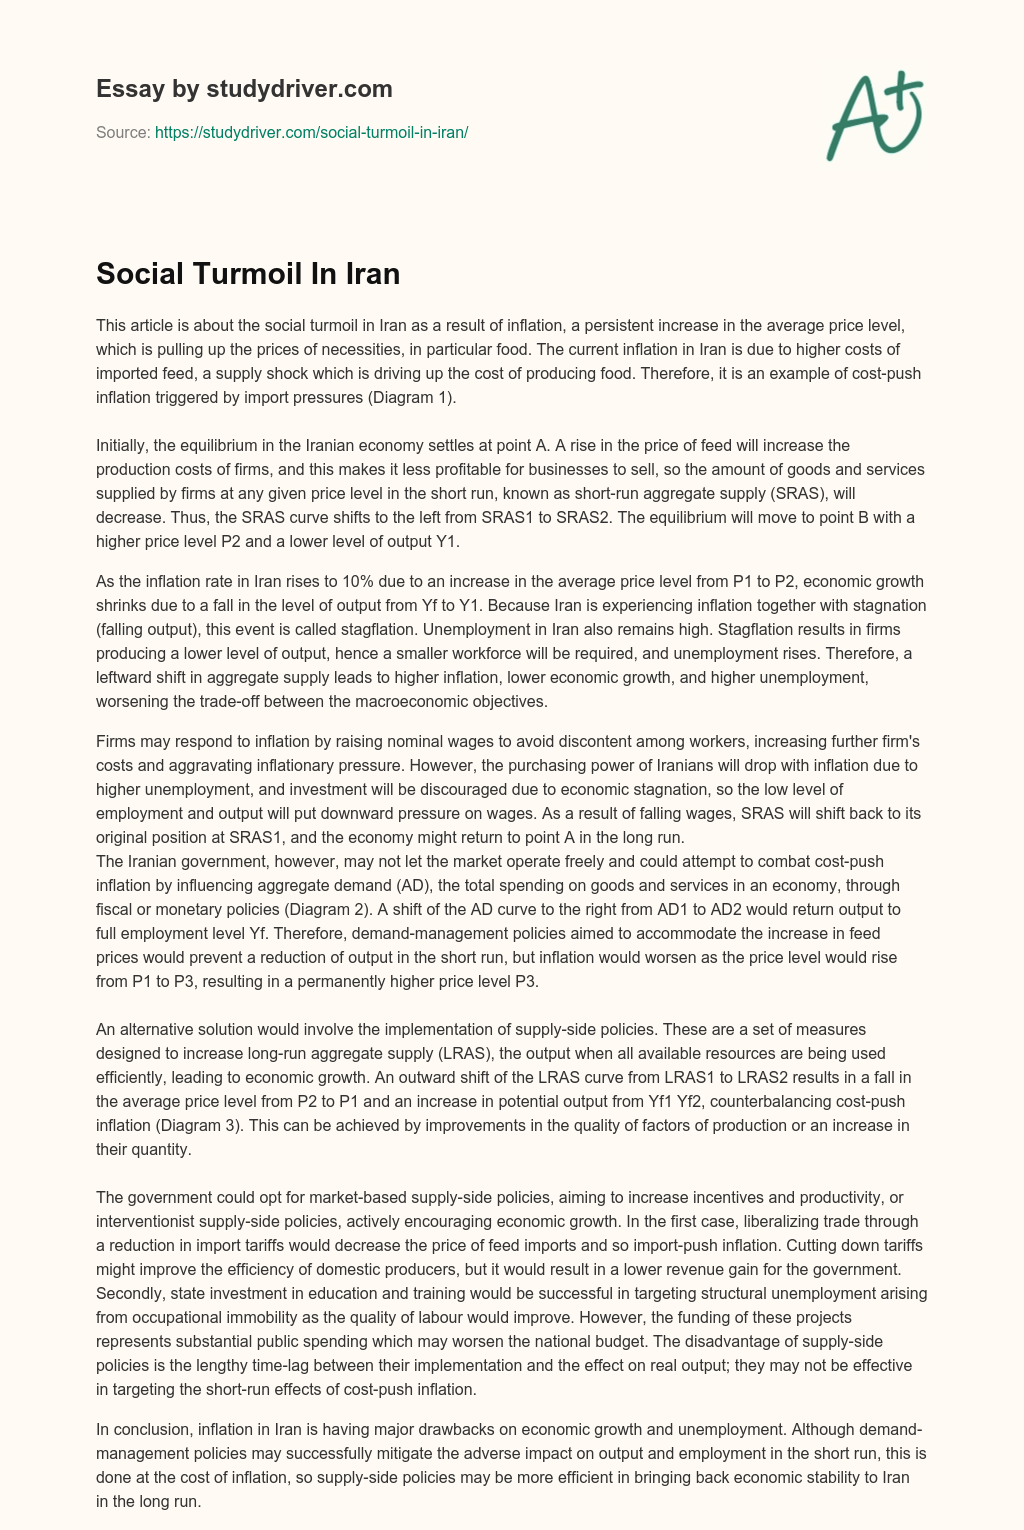 Social Turmoil in Iran essay